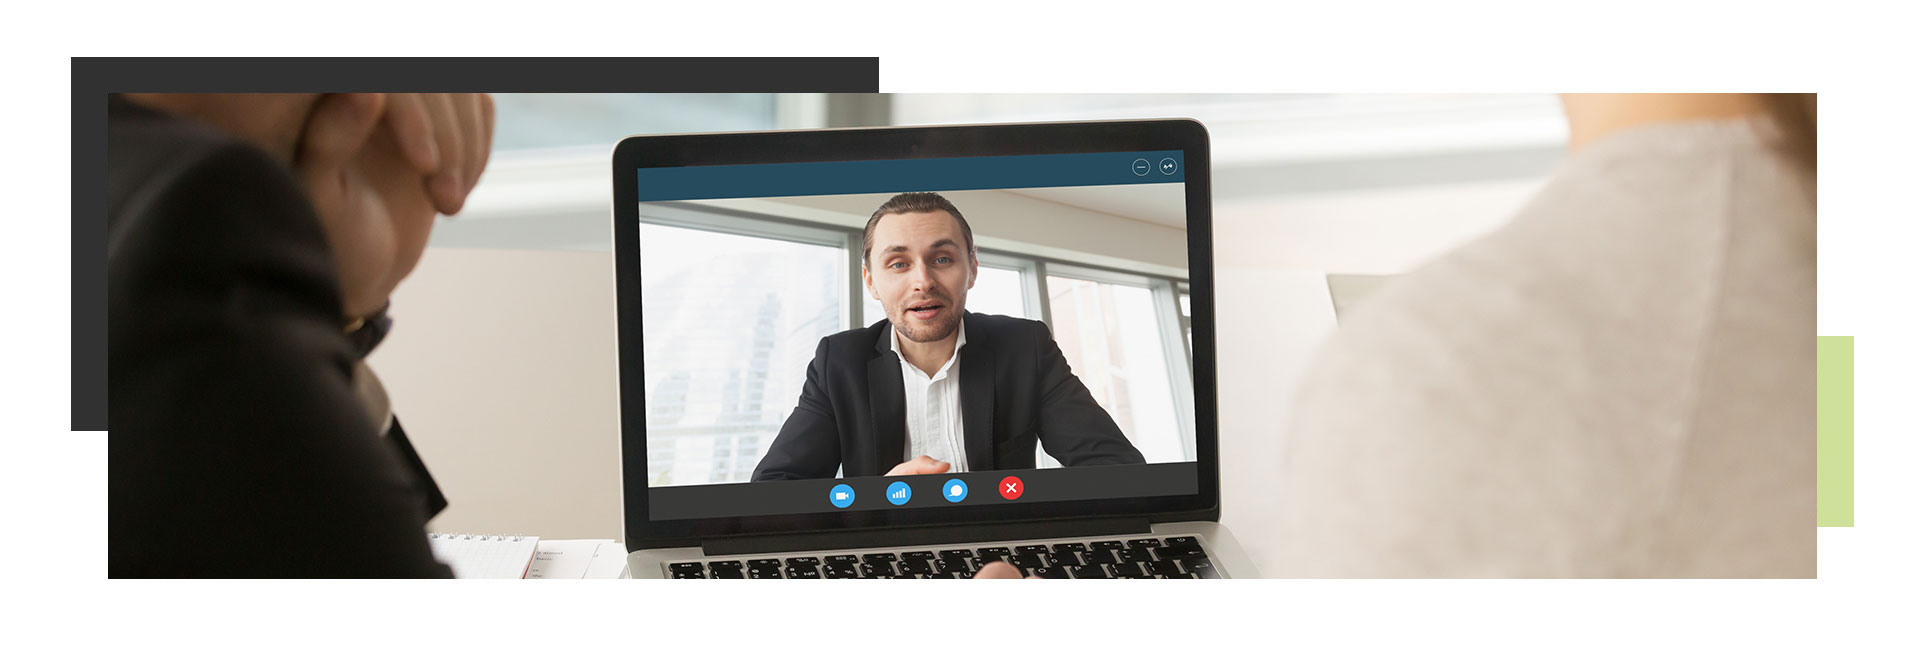 virtuele presentatie coaching voor de camera virtual presentation performance coaching